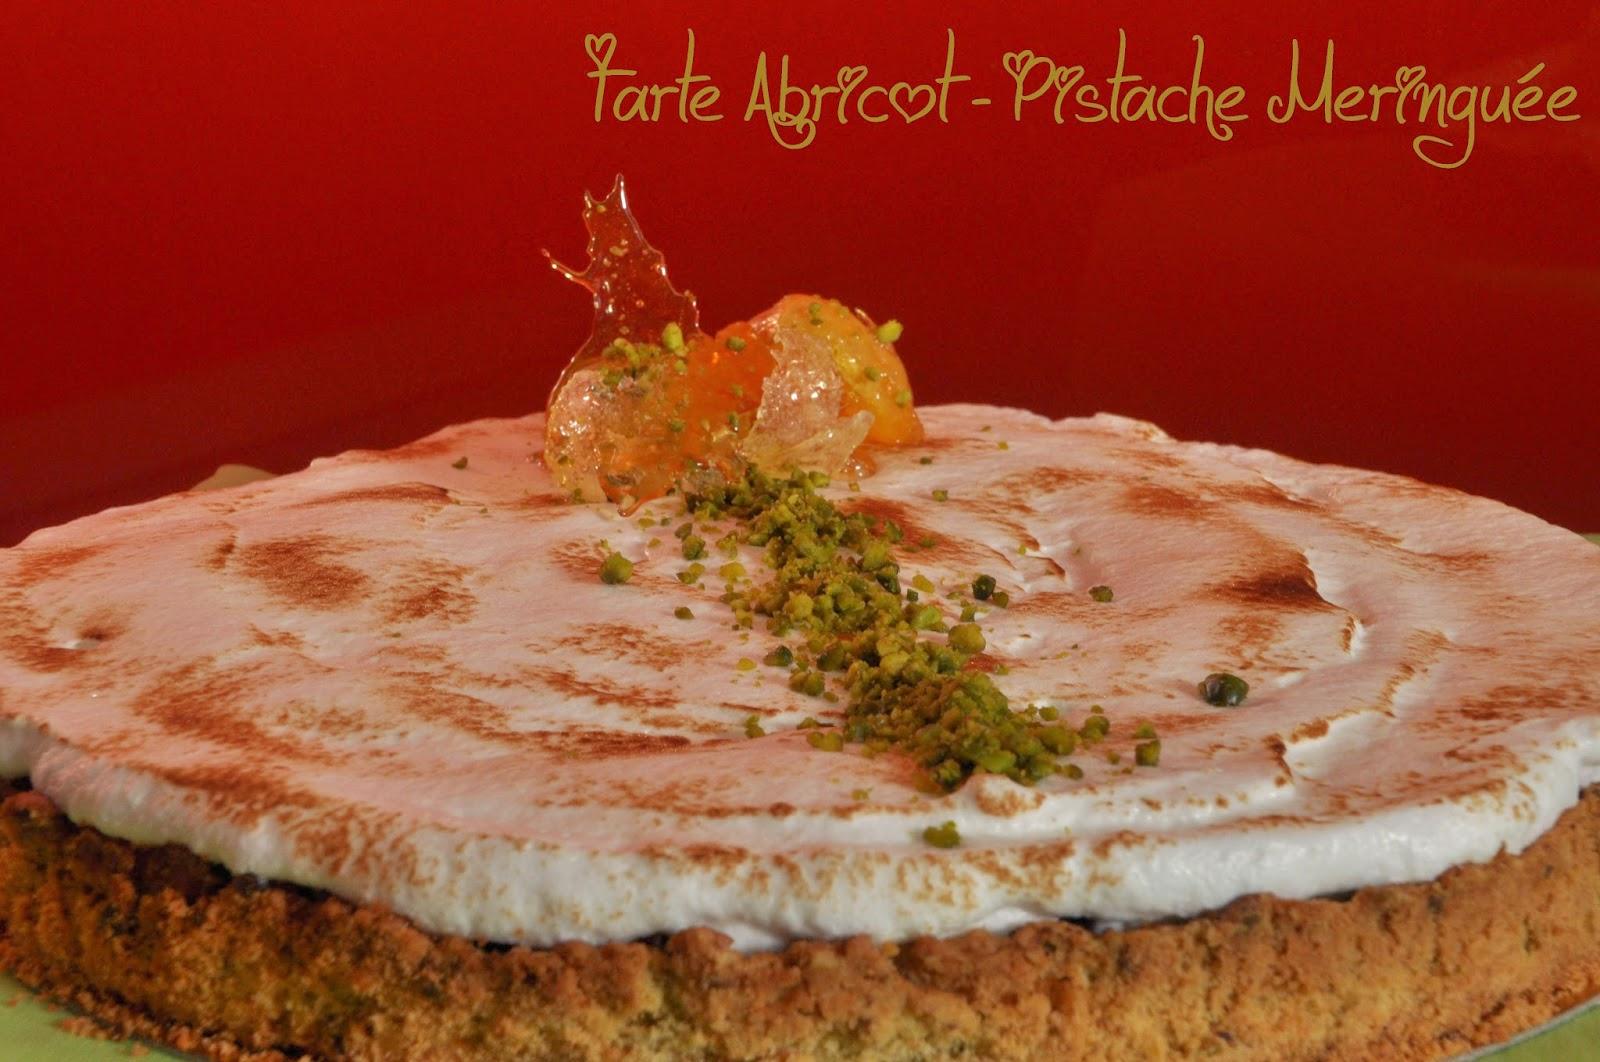 Tarte Abricot-Pistache meringuée